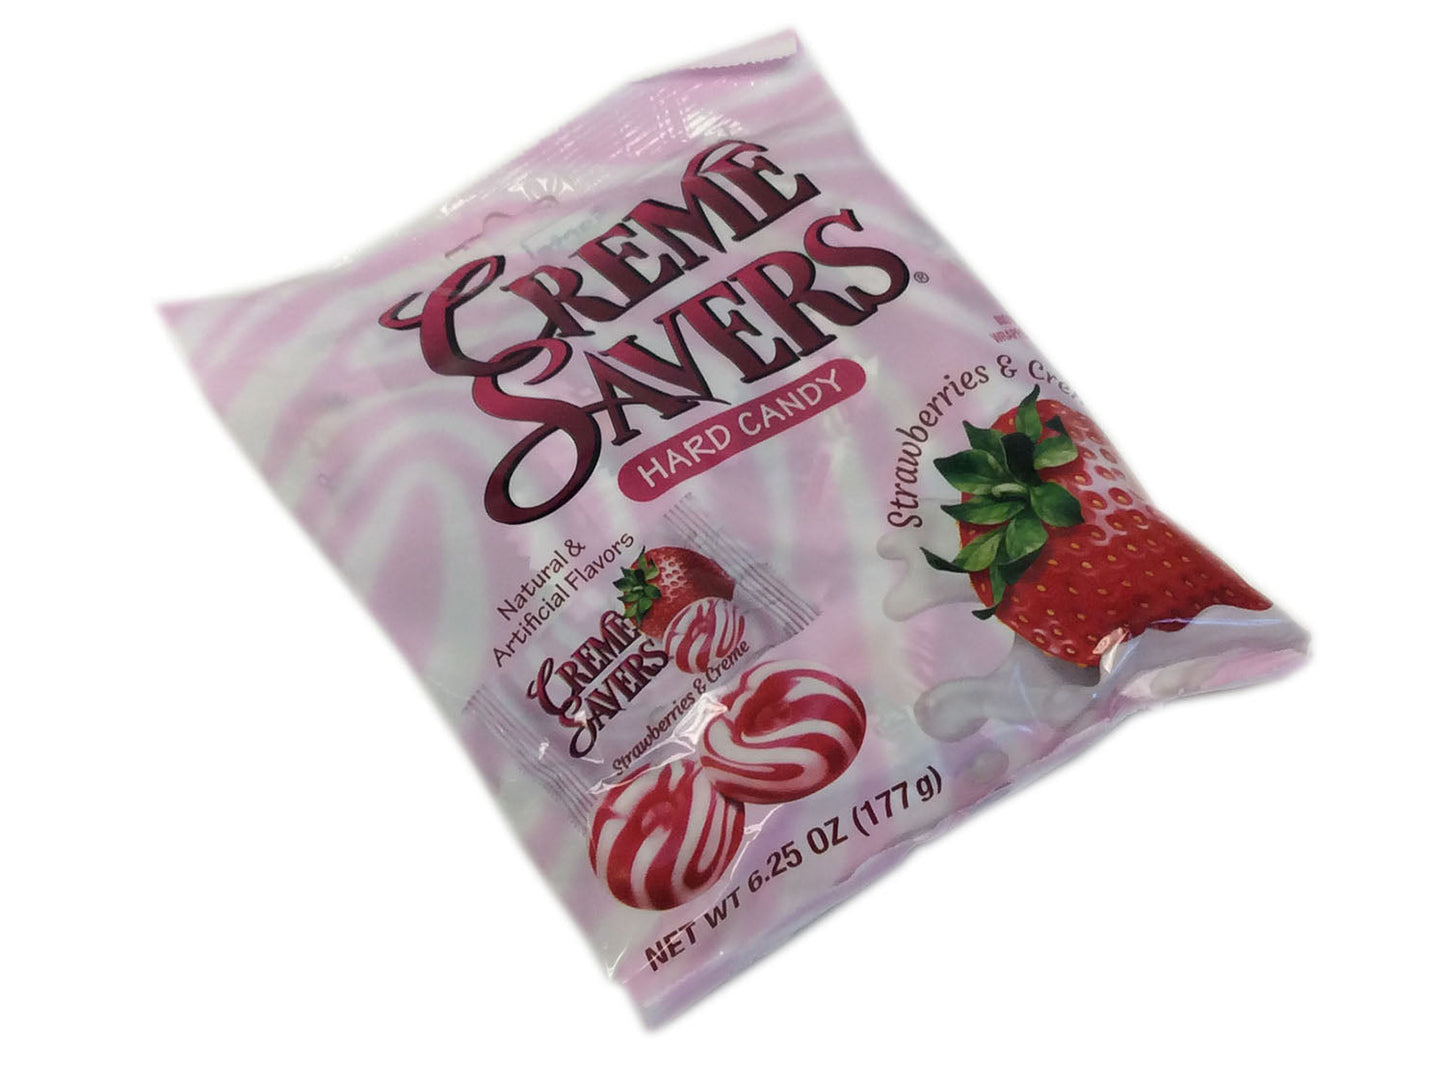 Creme Savers - Strawberries & Creme - 6.25 oz bag